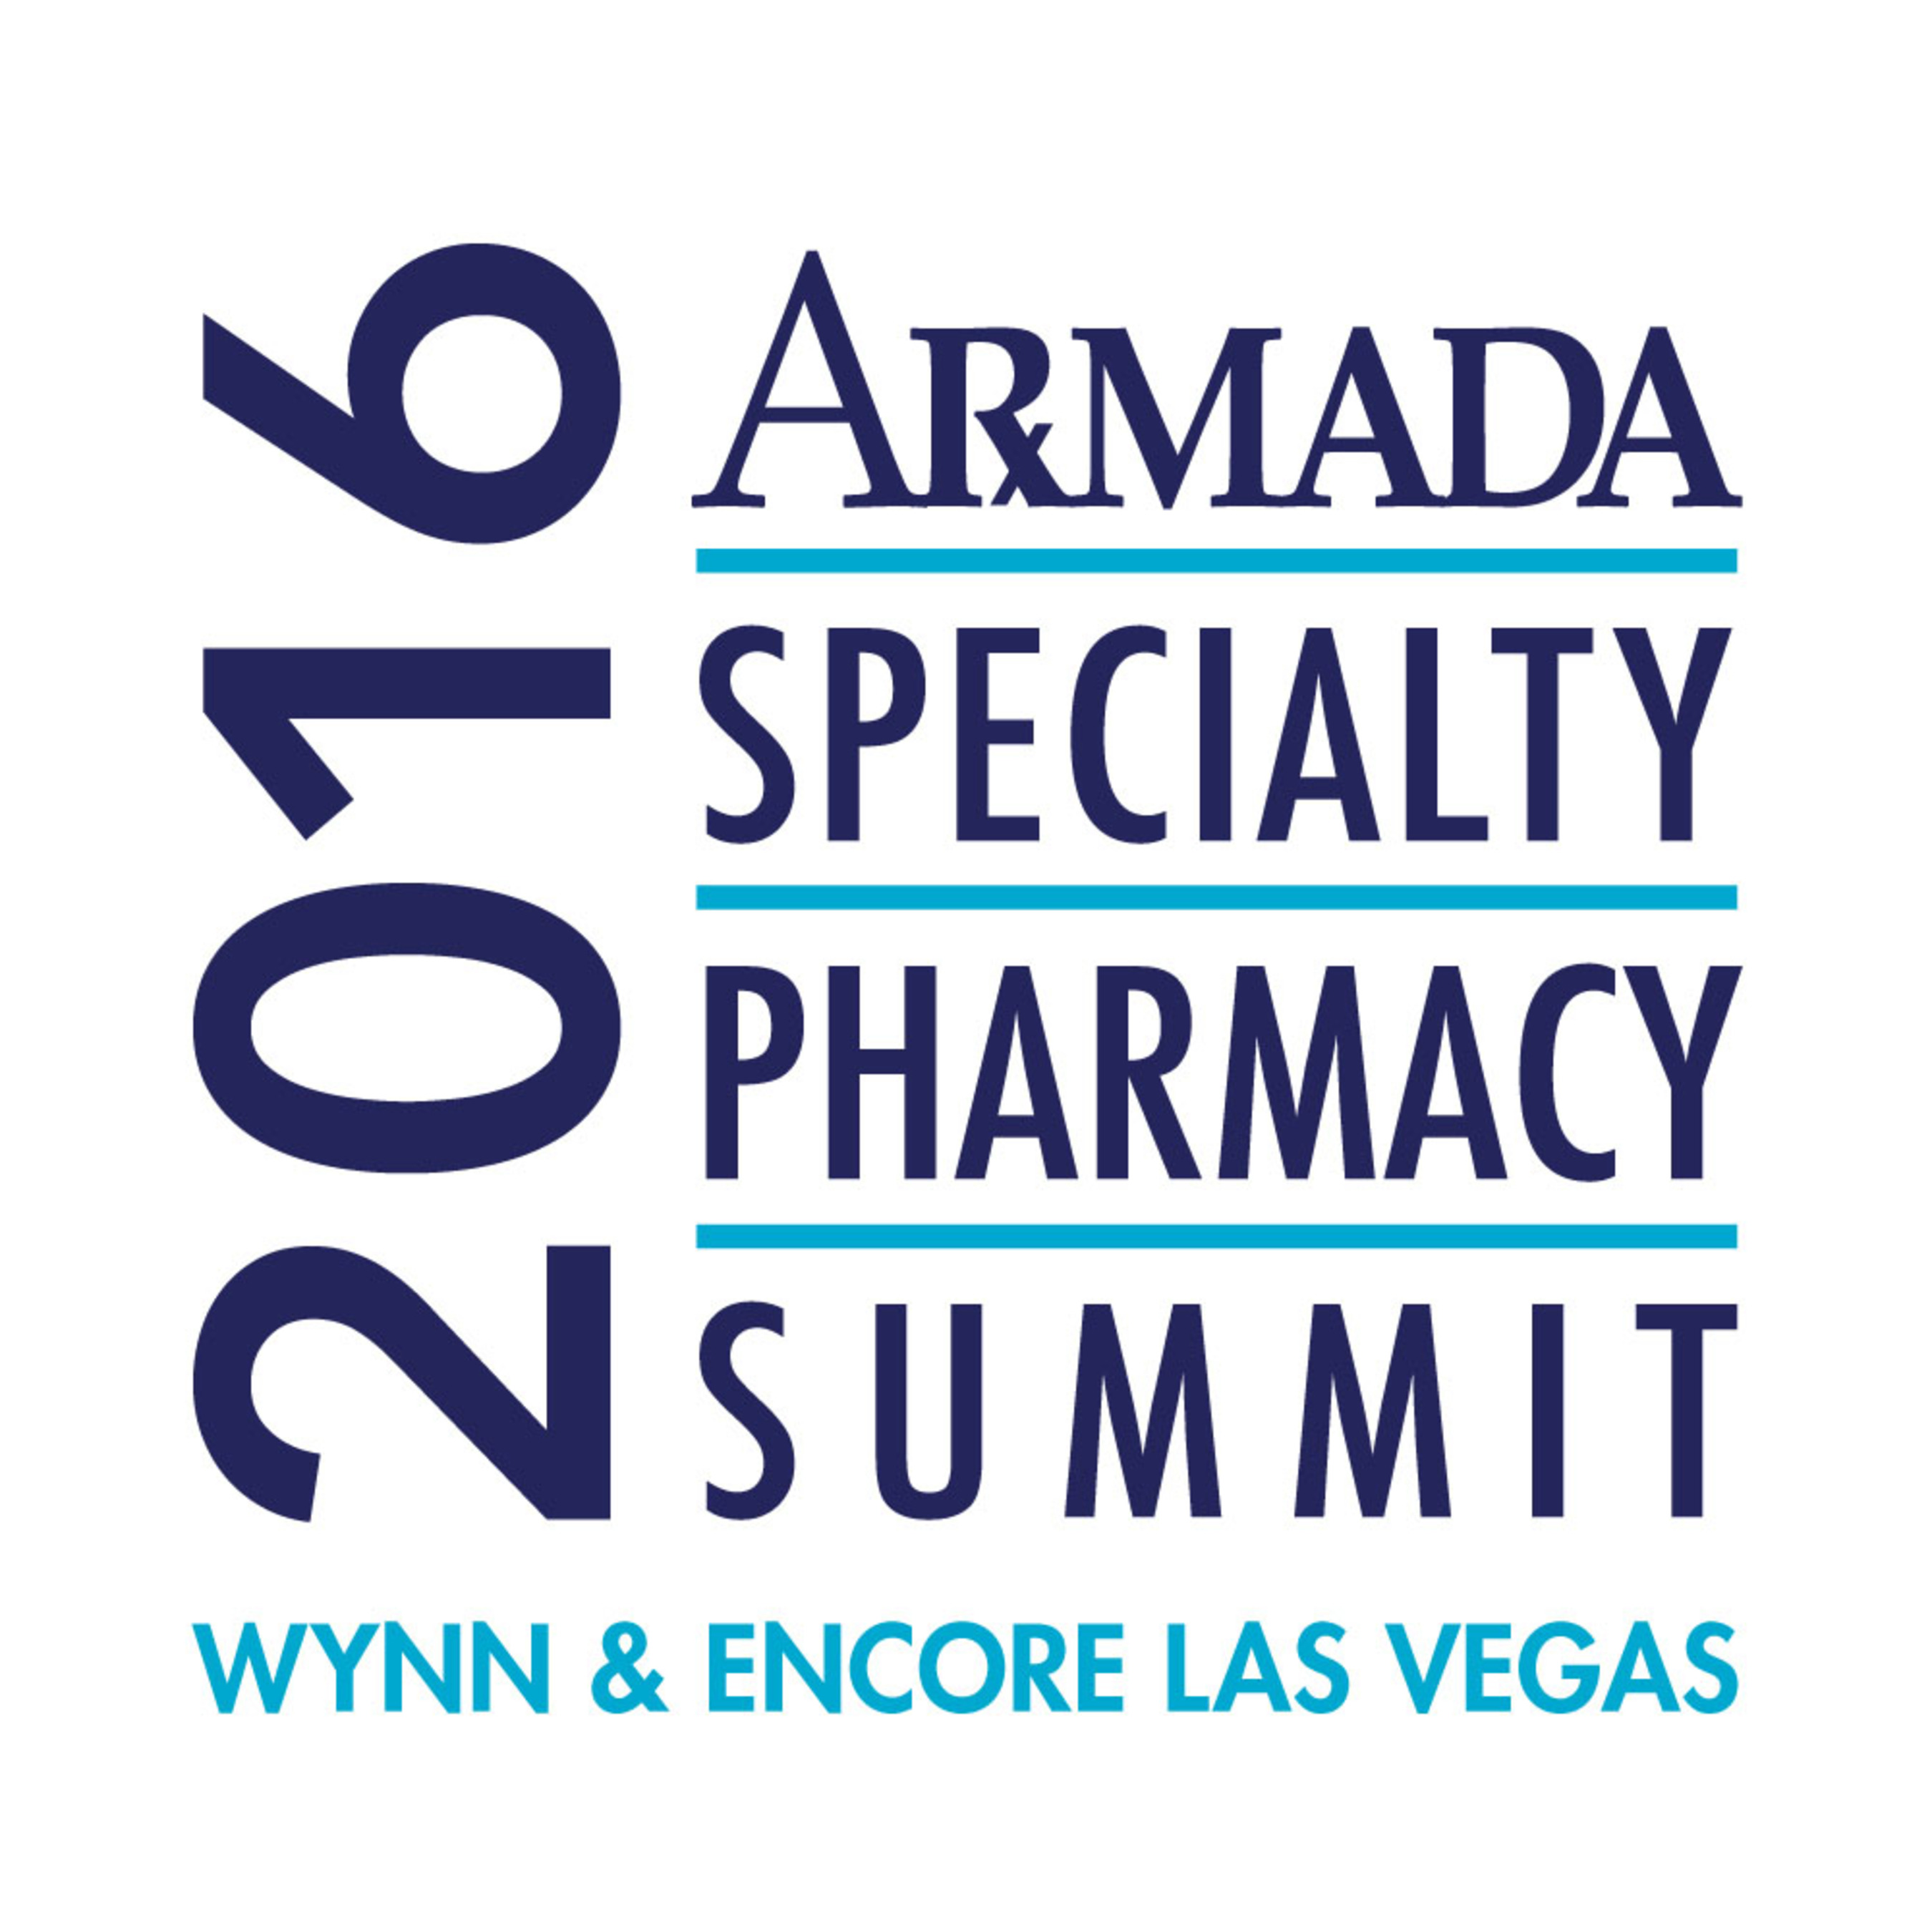 The 2016 Armada Specialty Pharmacy Summit will be held May 2-6, 2016 at Wynn & Encore Las Vegas